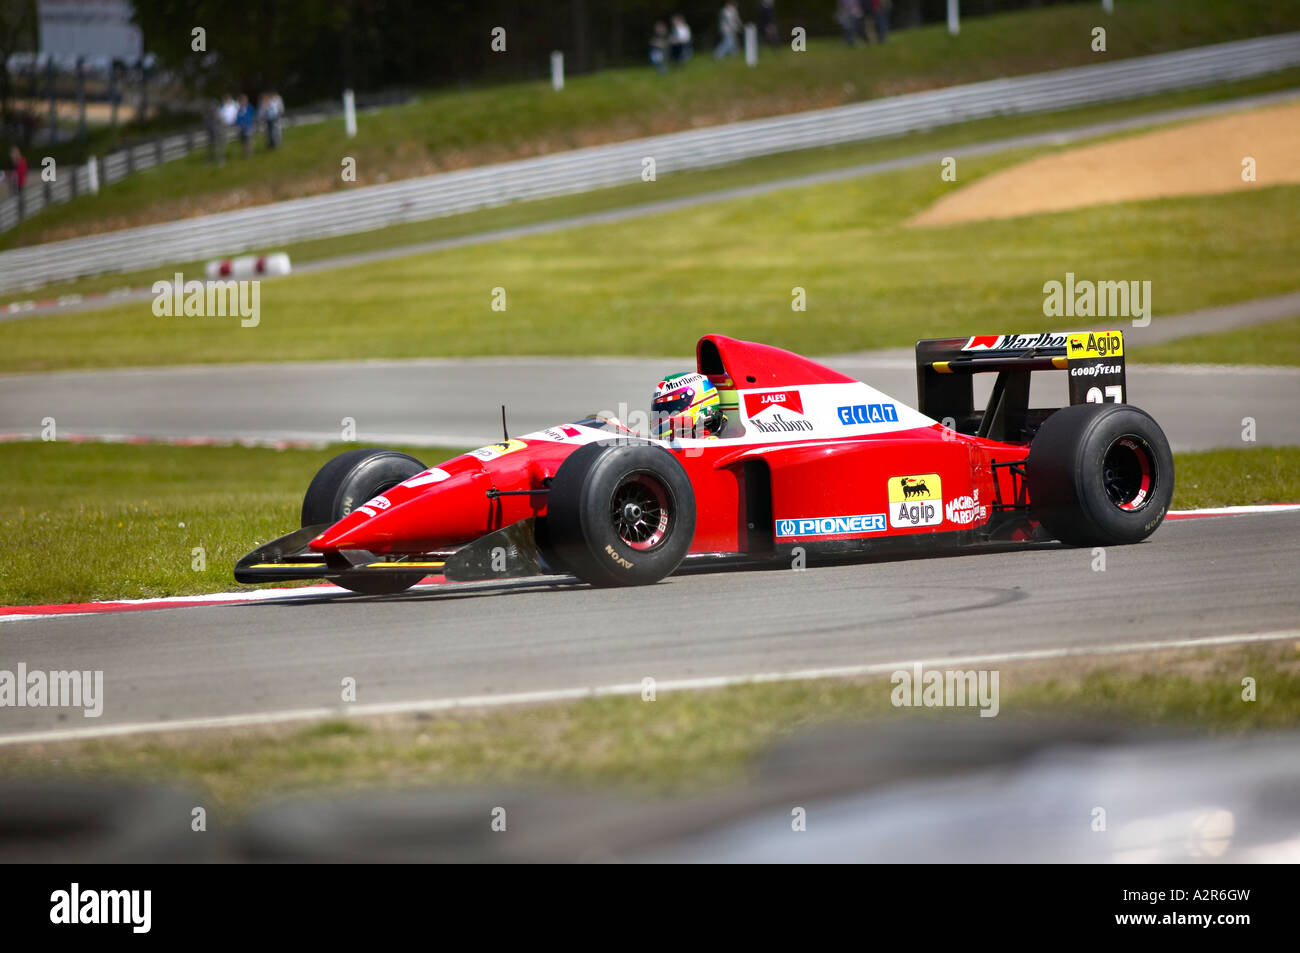 Scuderia Ferrari Marlboro Formula One Racing Team Editorial Photography -  Image of furios, championships: 13839047